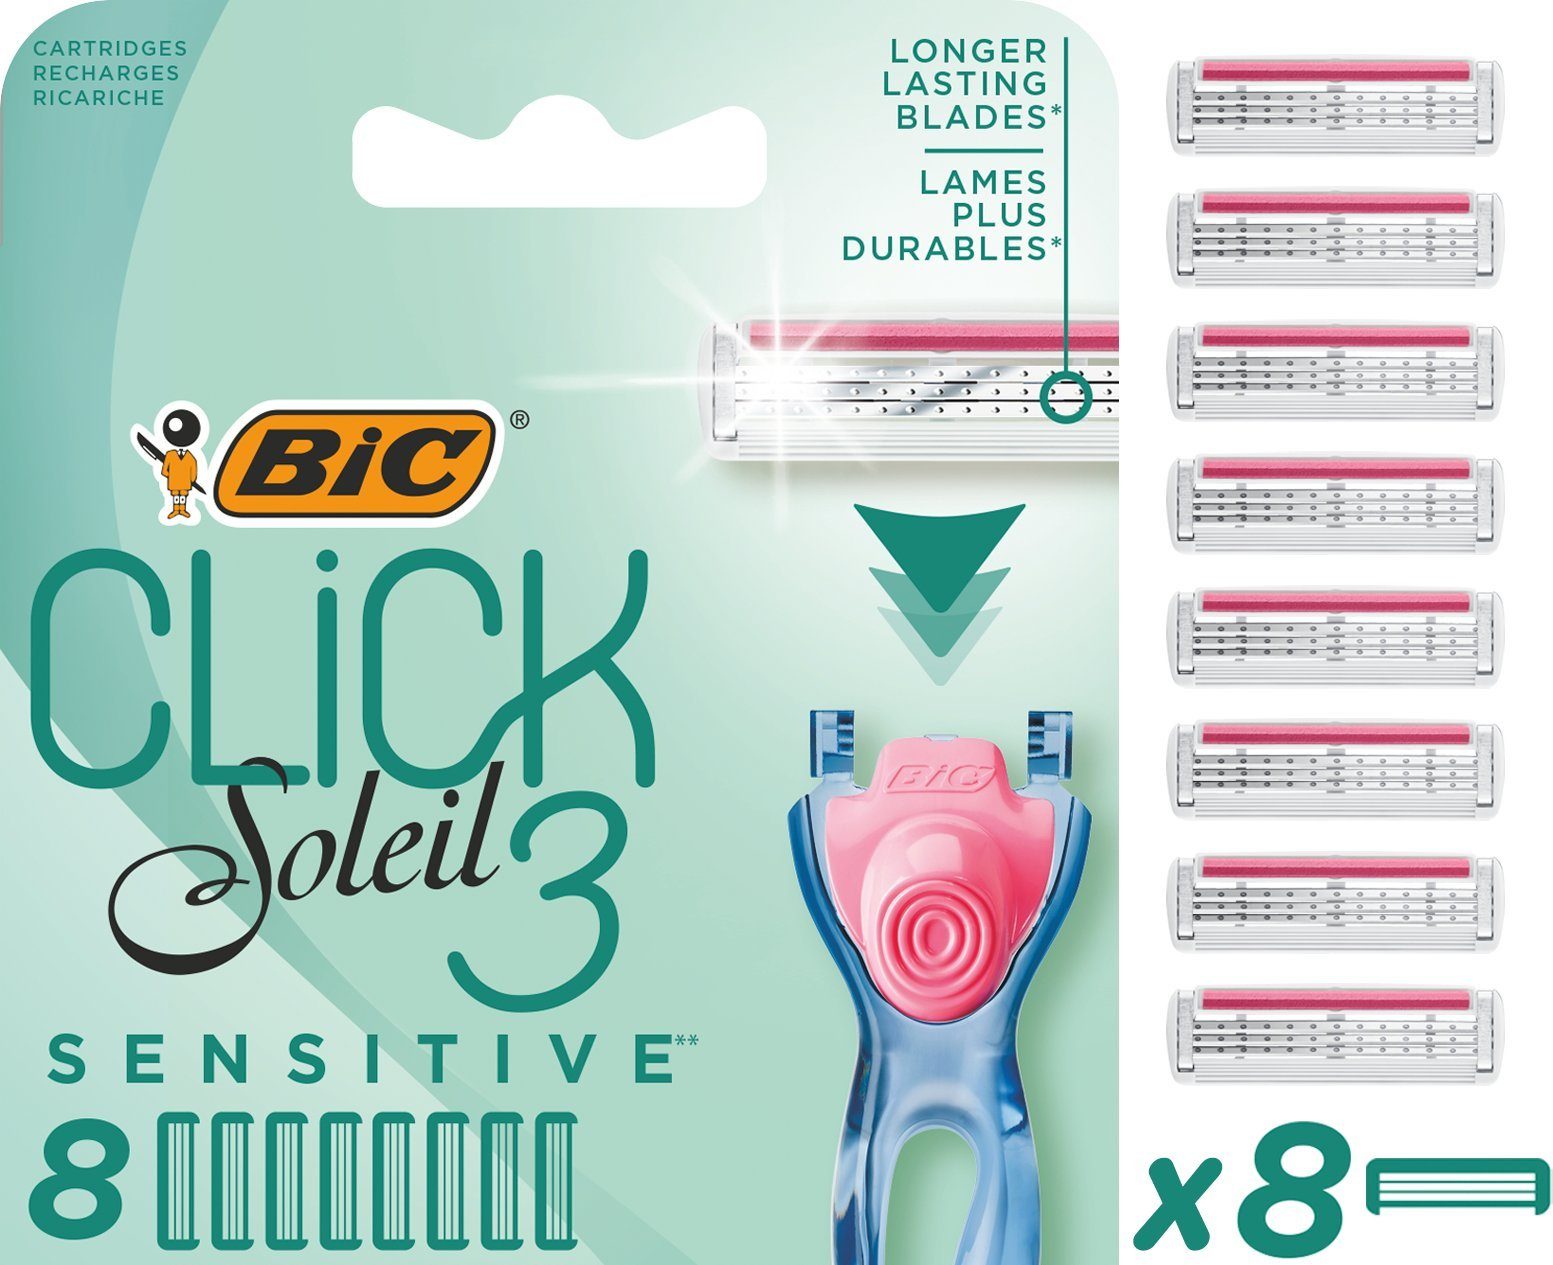 Damenrasierer-Nachfüllklingen Soleil – BIC Sensitive 3 Click Rasierklingen Nachfüllpackung, 8er BIC